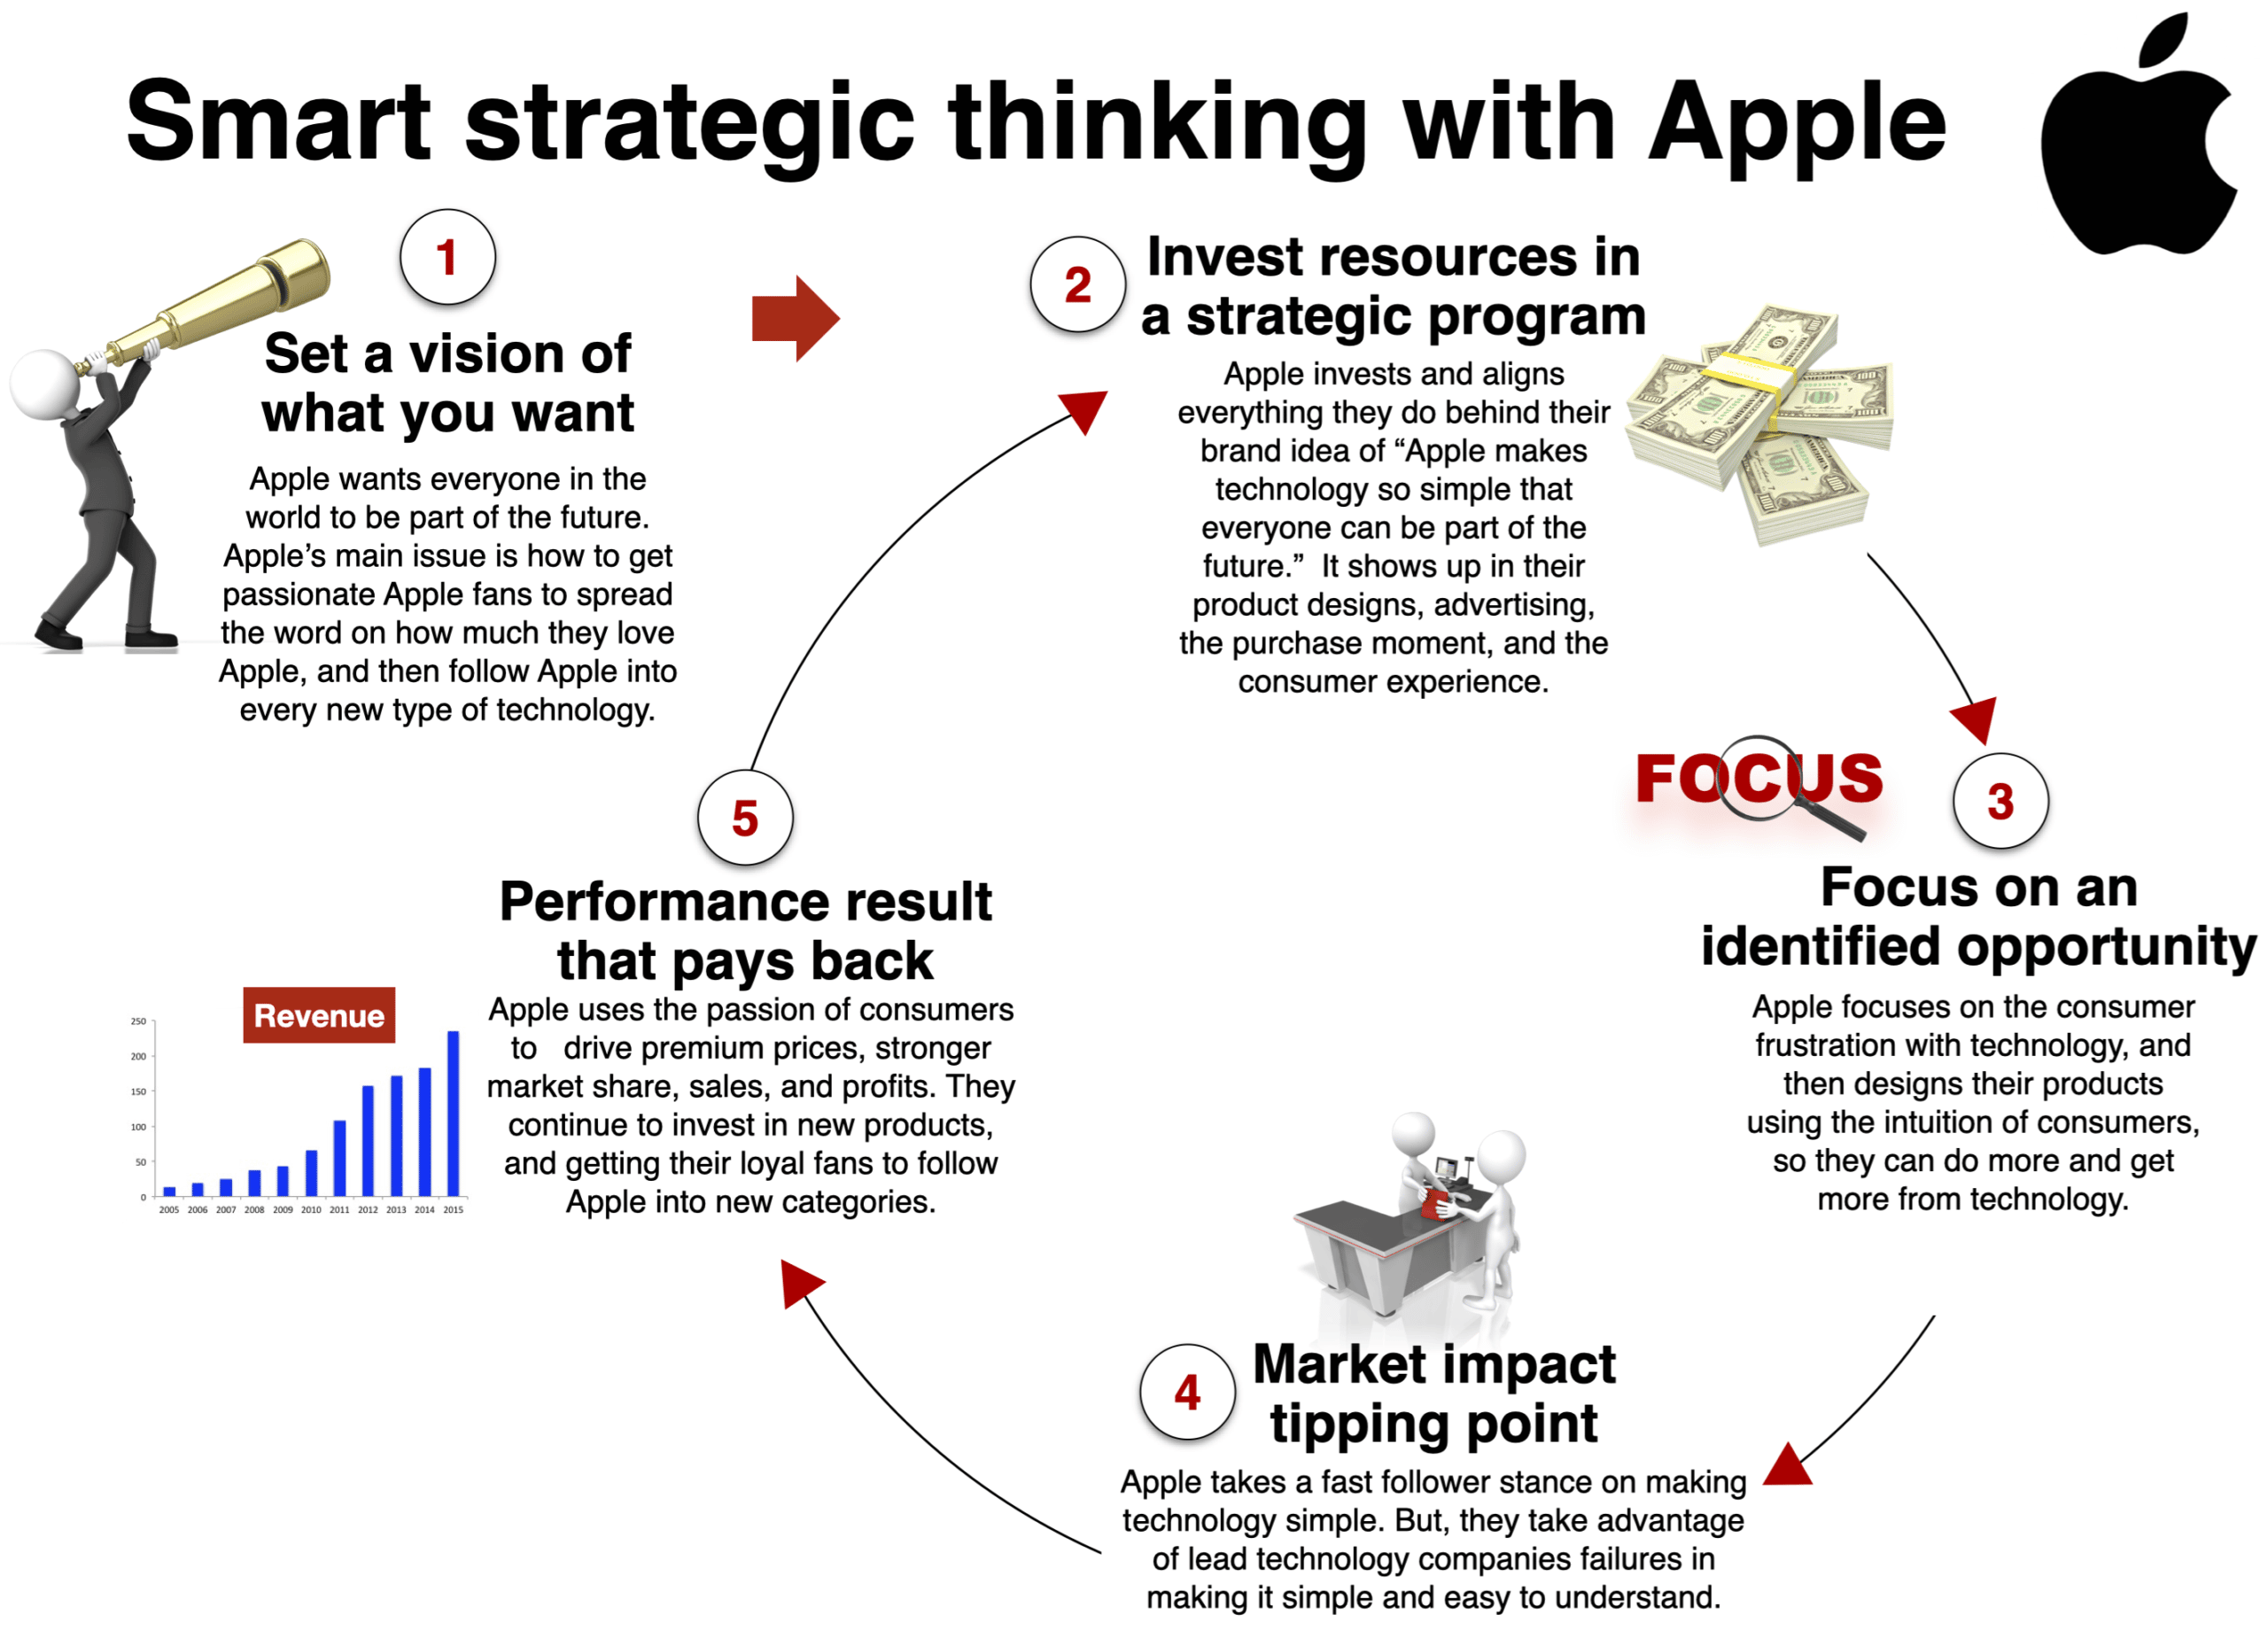 How Steve Jobs built the Apple brand strategy around simplicity